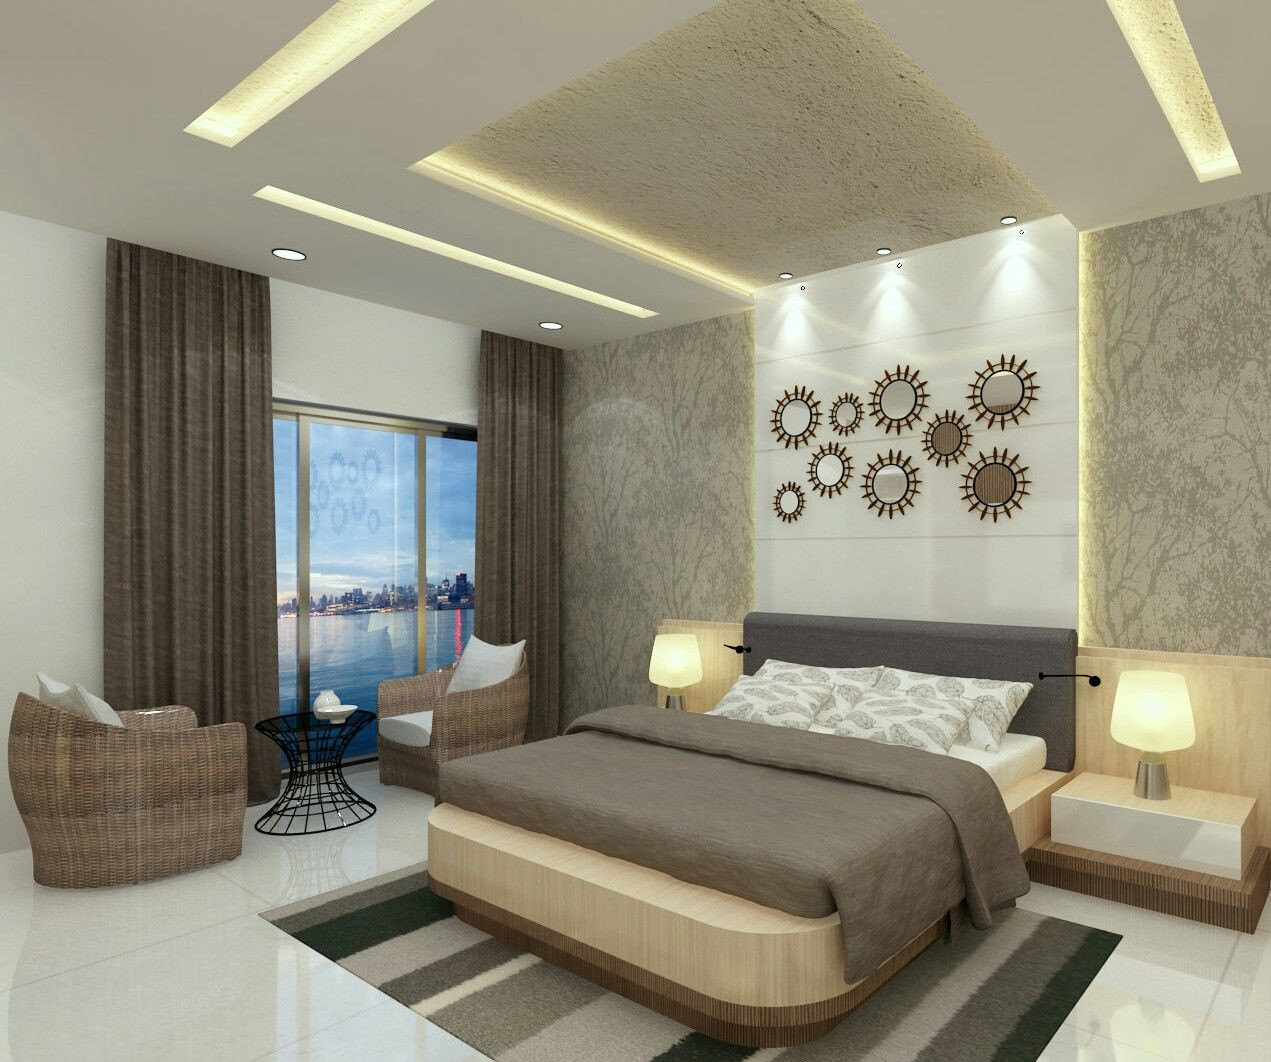 Modern Ceiling Design For Bedroom
 Bedroom decor always needs a luxurious suspension lamp